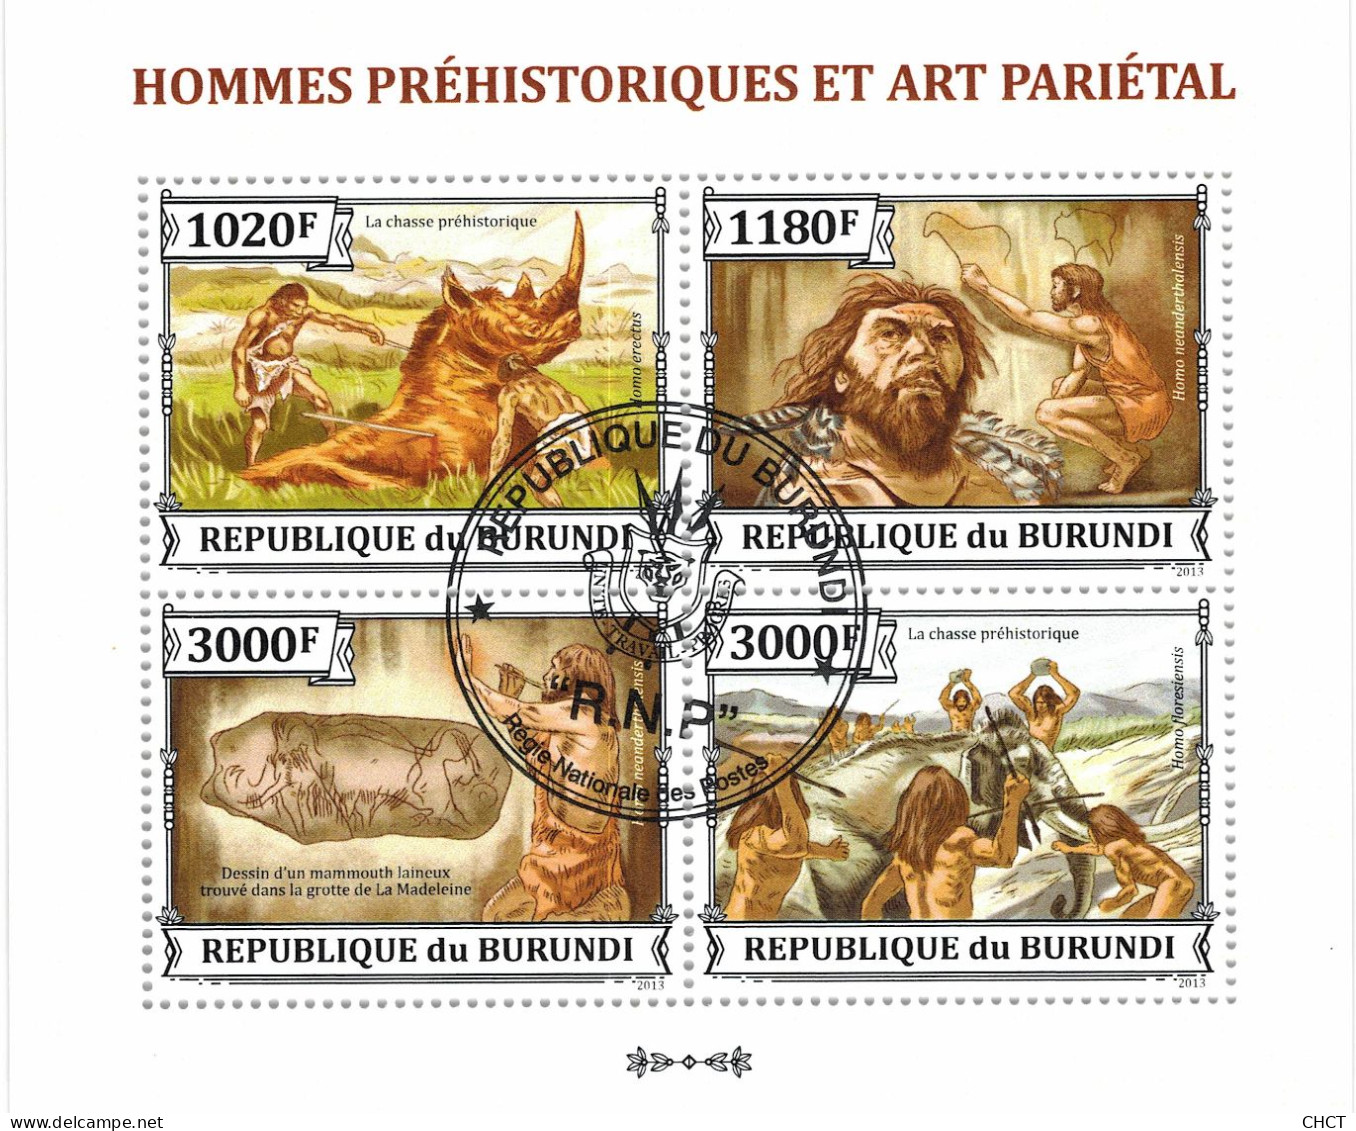 CHCT65 - Prehistoric Humans & Art, History, Stamp Mini Sheet, Used CTO, 2013, Burundi - Used Stamps